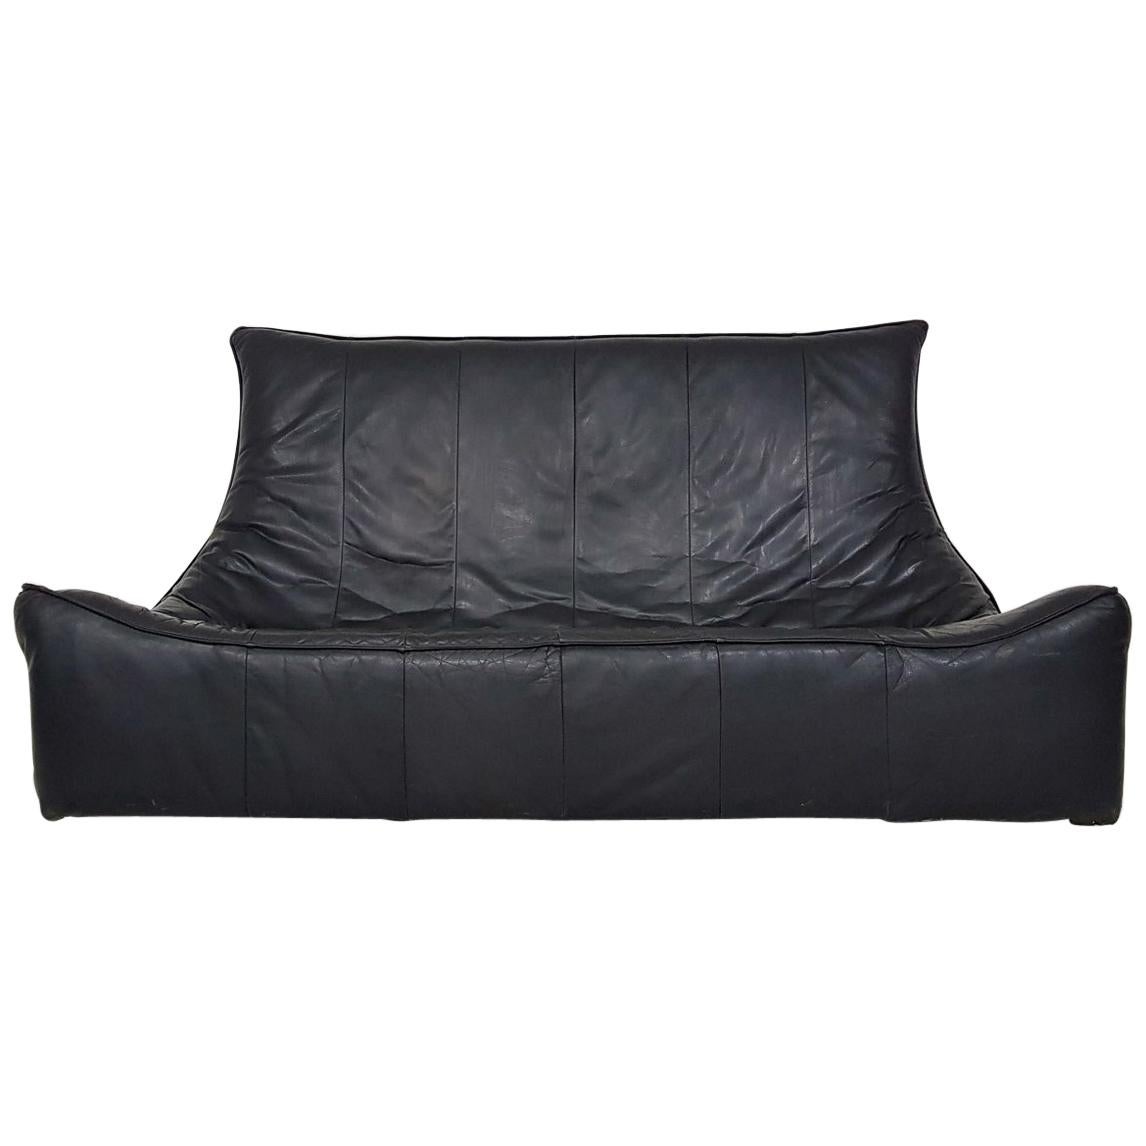 Gerard van den Berg "The Rock" Black Leather 3 Seat Sofa, Brutalist Dutch Design